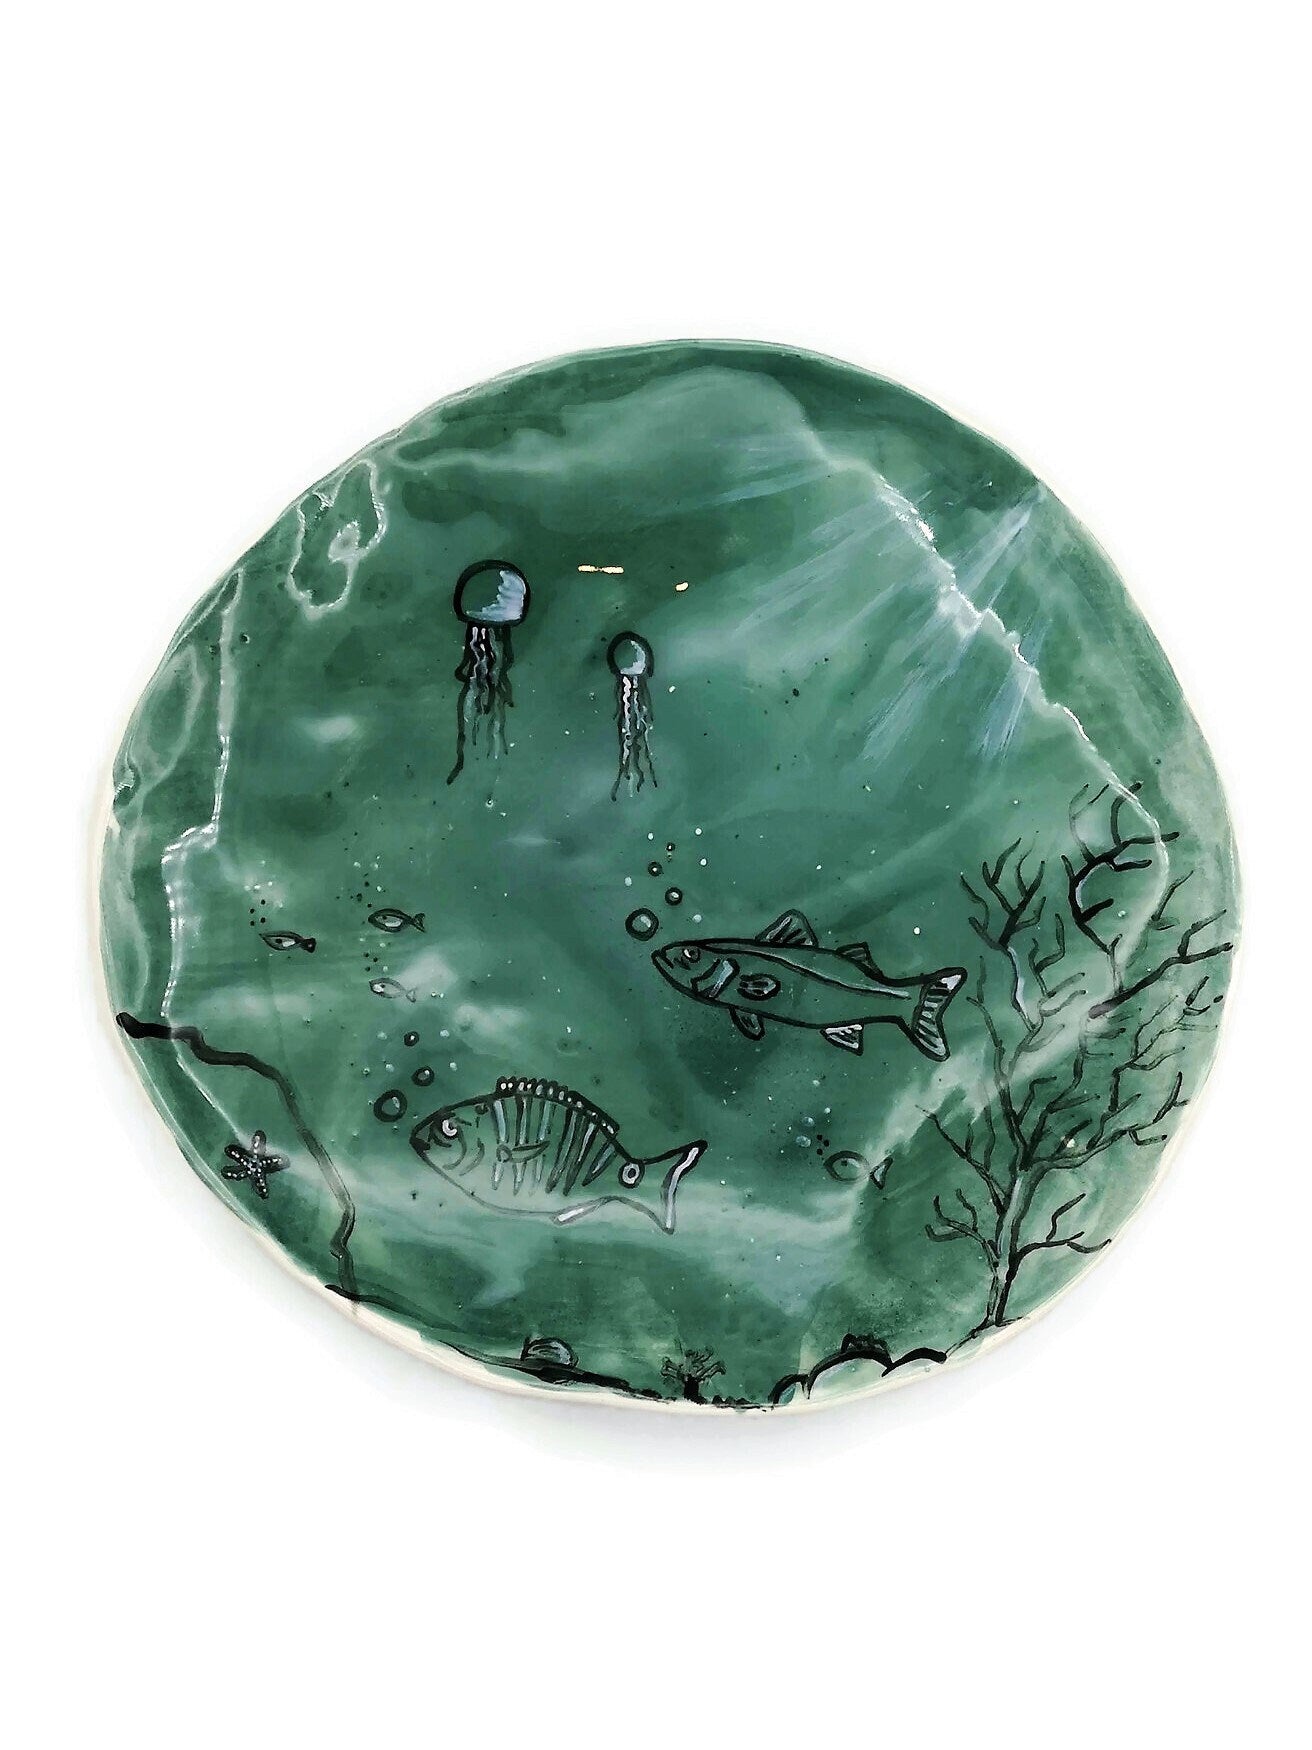 Large Handmade Ceramic Plate, Ocean Home Decor For Wall Display, Green Portuguese Pottery Unique Dinner Plates, Serving Cake Platter - Ceramica Ana Rafael